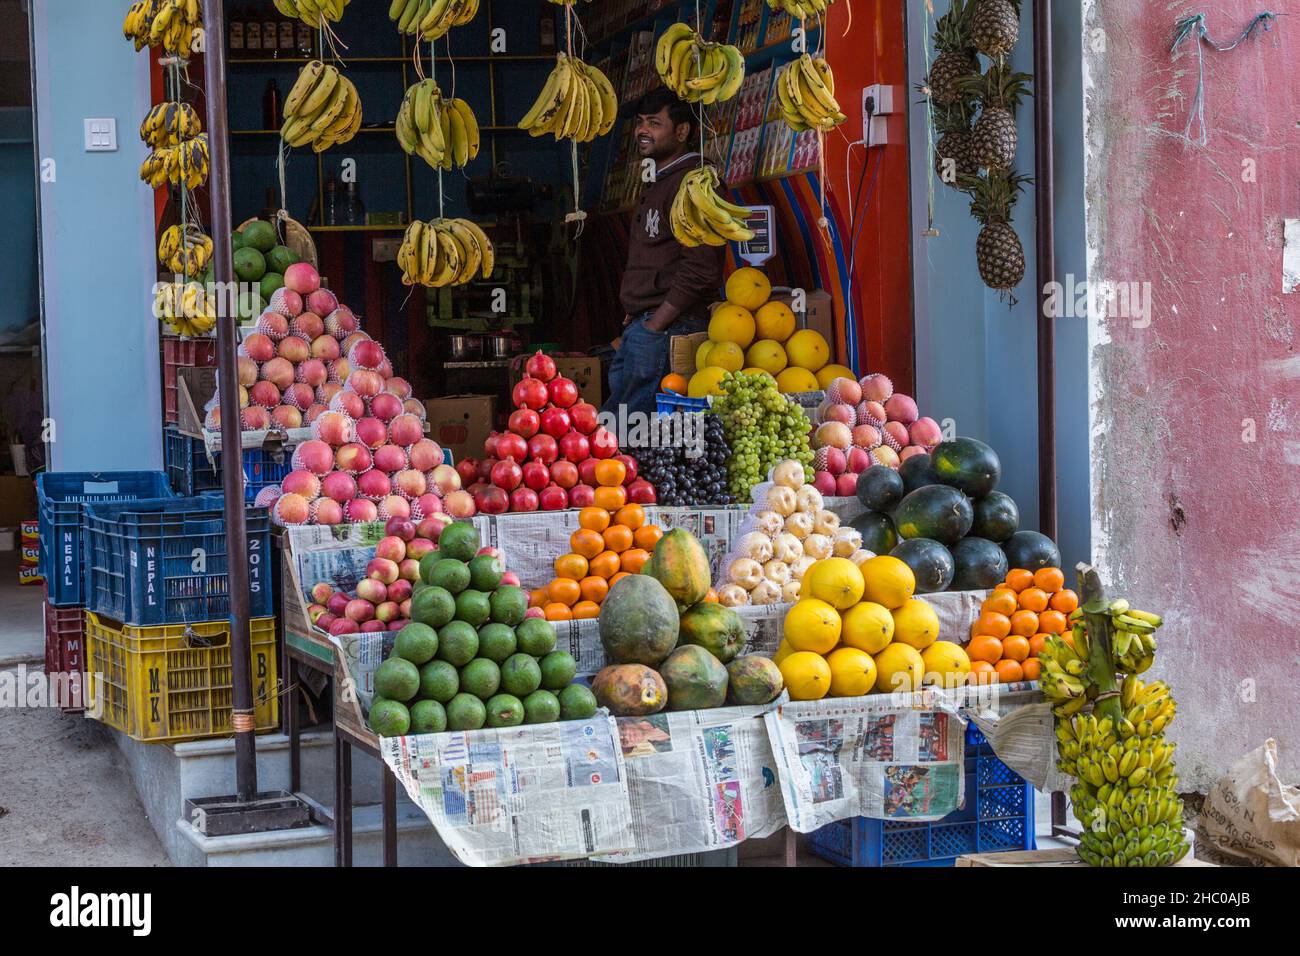 Piramidi di frutta in vendita in uno stand in riva al quartiere vendita di frutta fresca nella città di Kathmandu, Nepal. Foto Stock